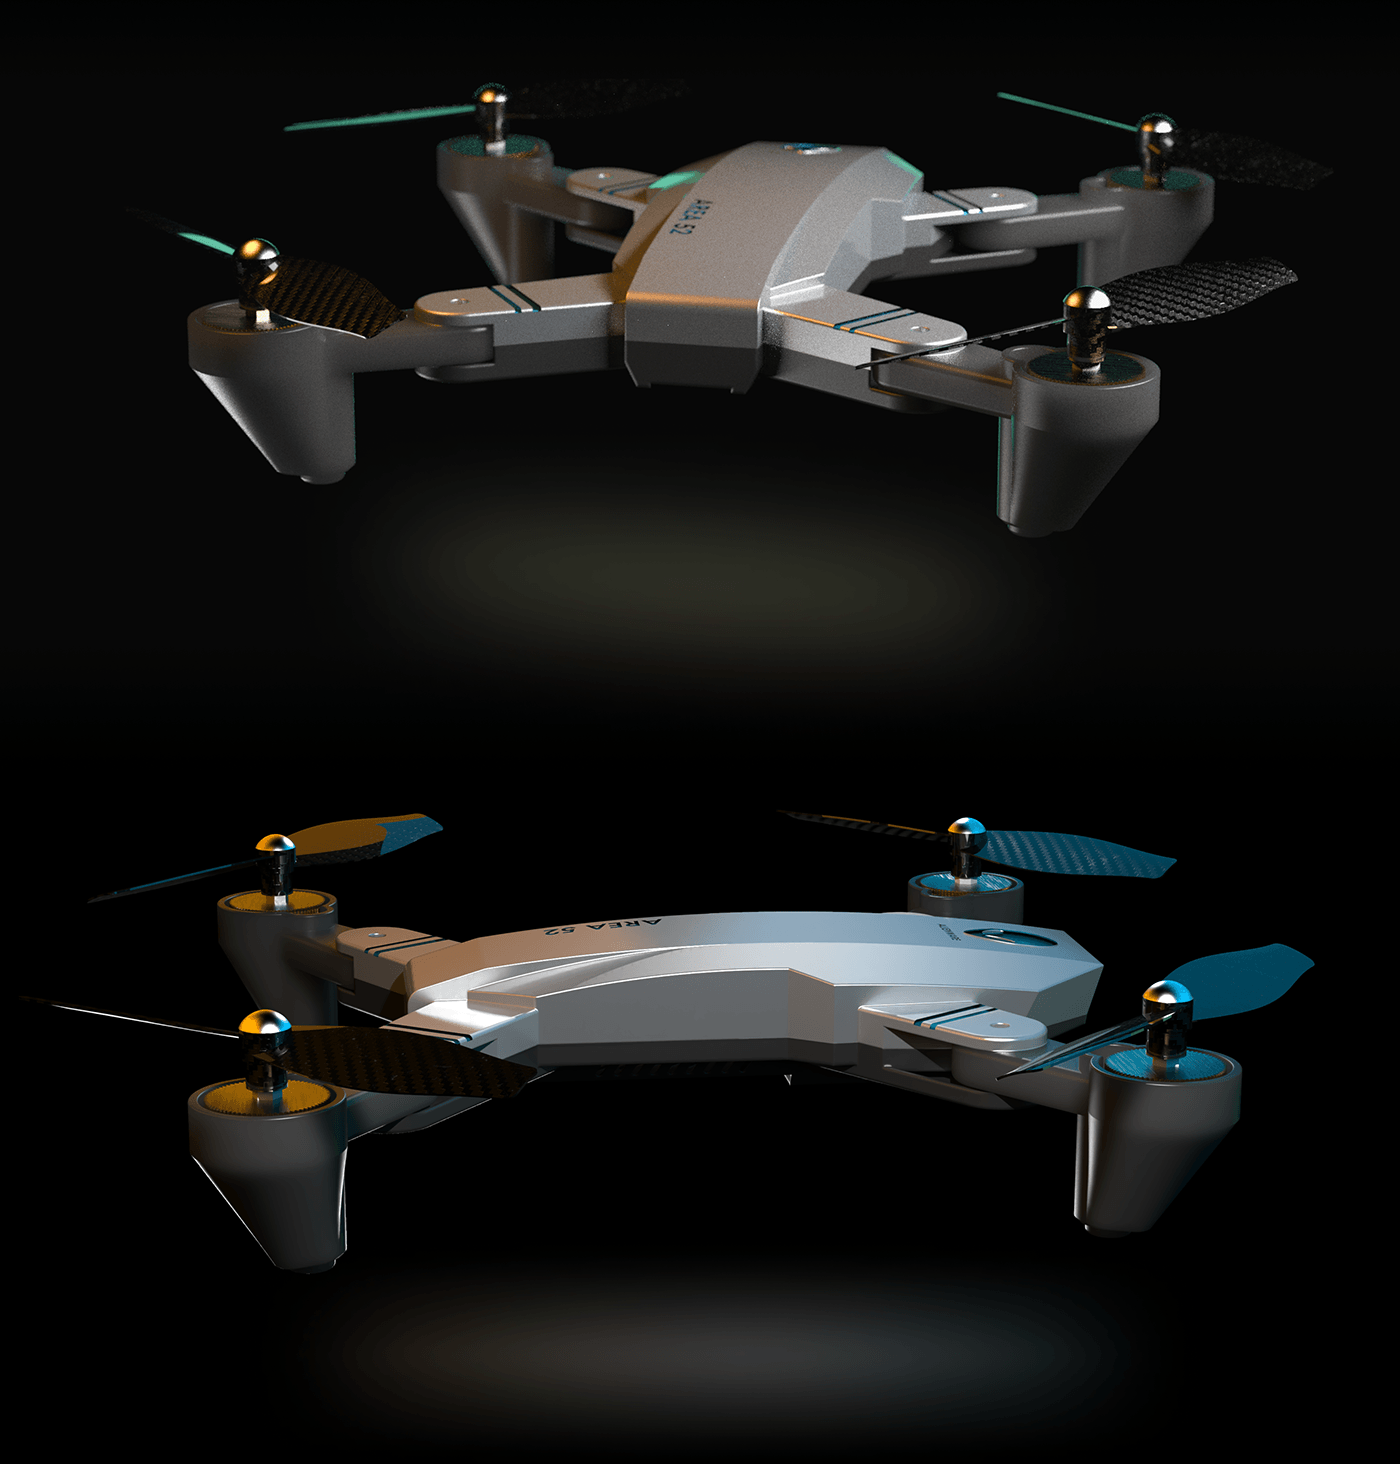 design drone hairdryer air purifier ear buds electronic DJI alienware